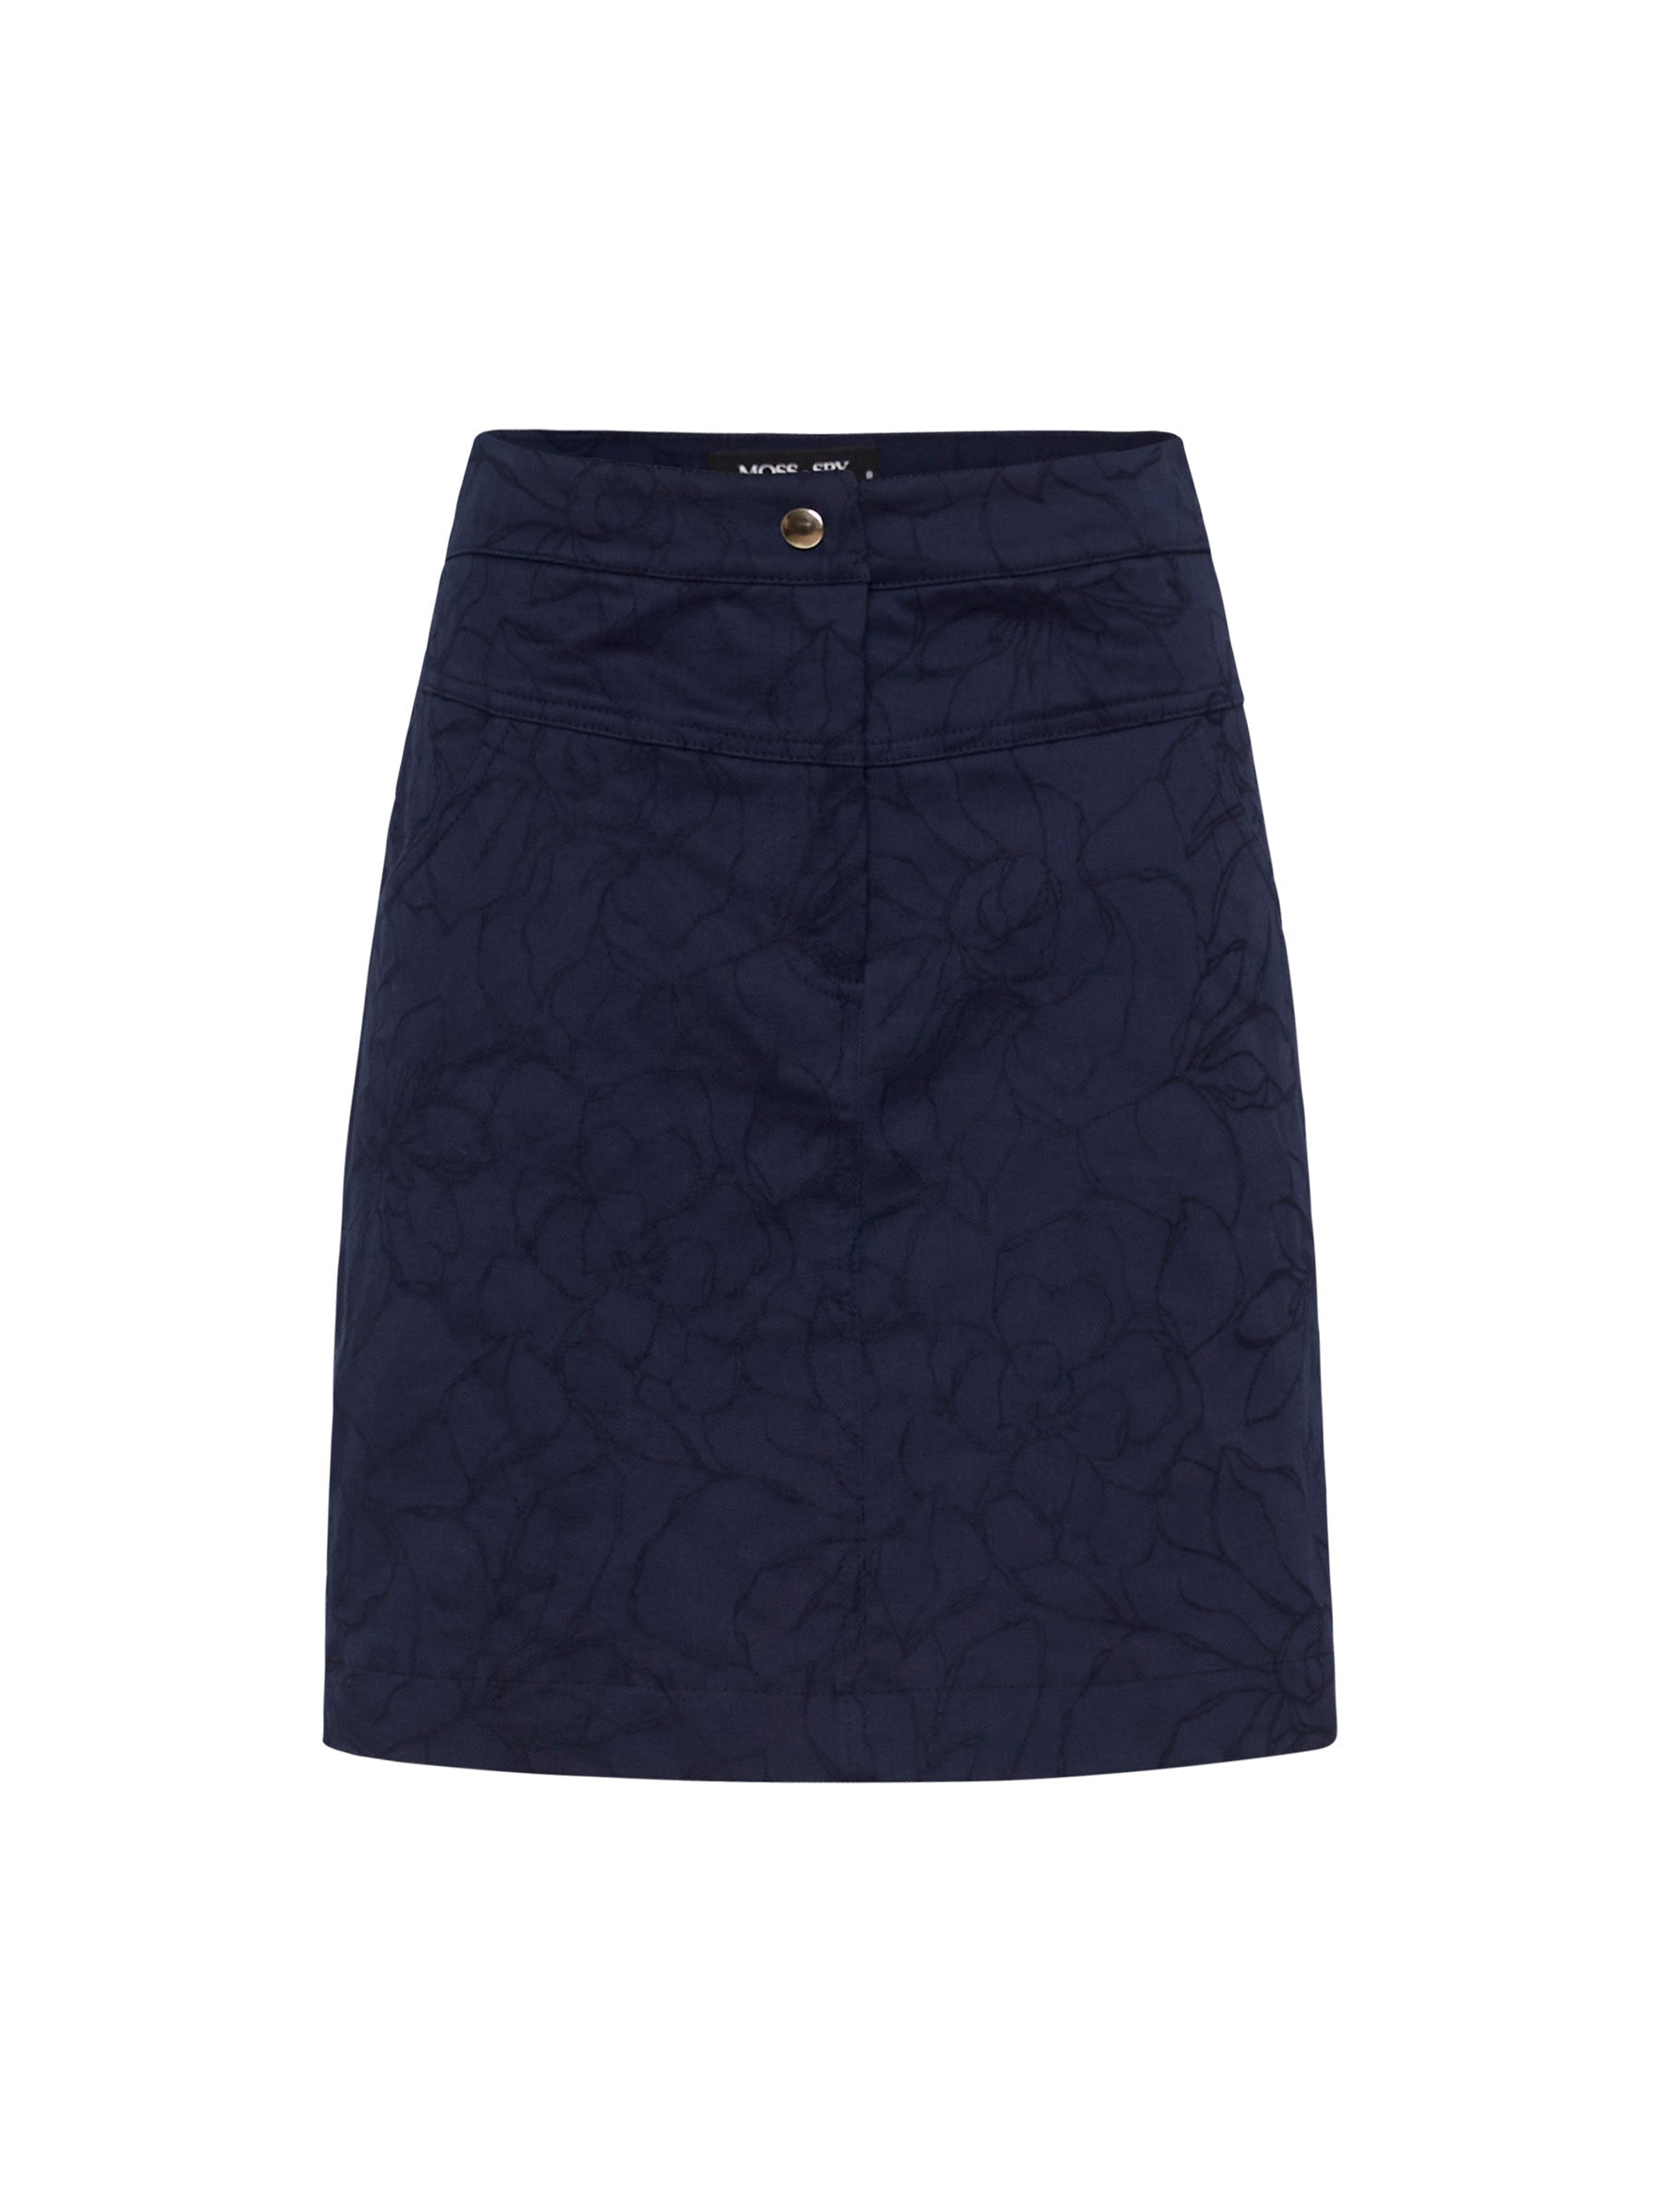 Leona Mini Skirt - Marine Blue (Size 10 Only)